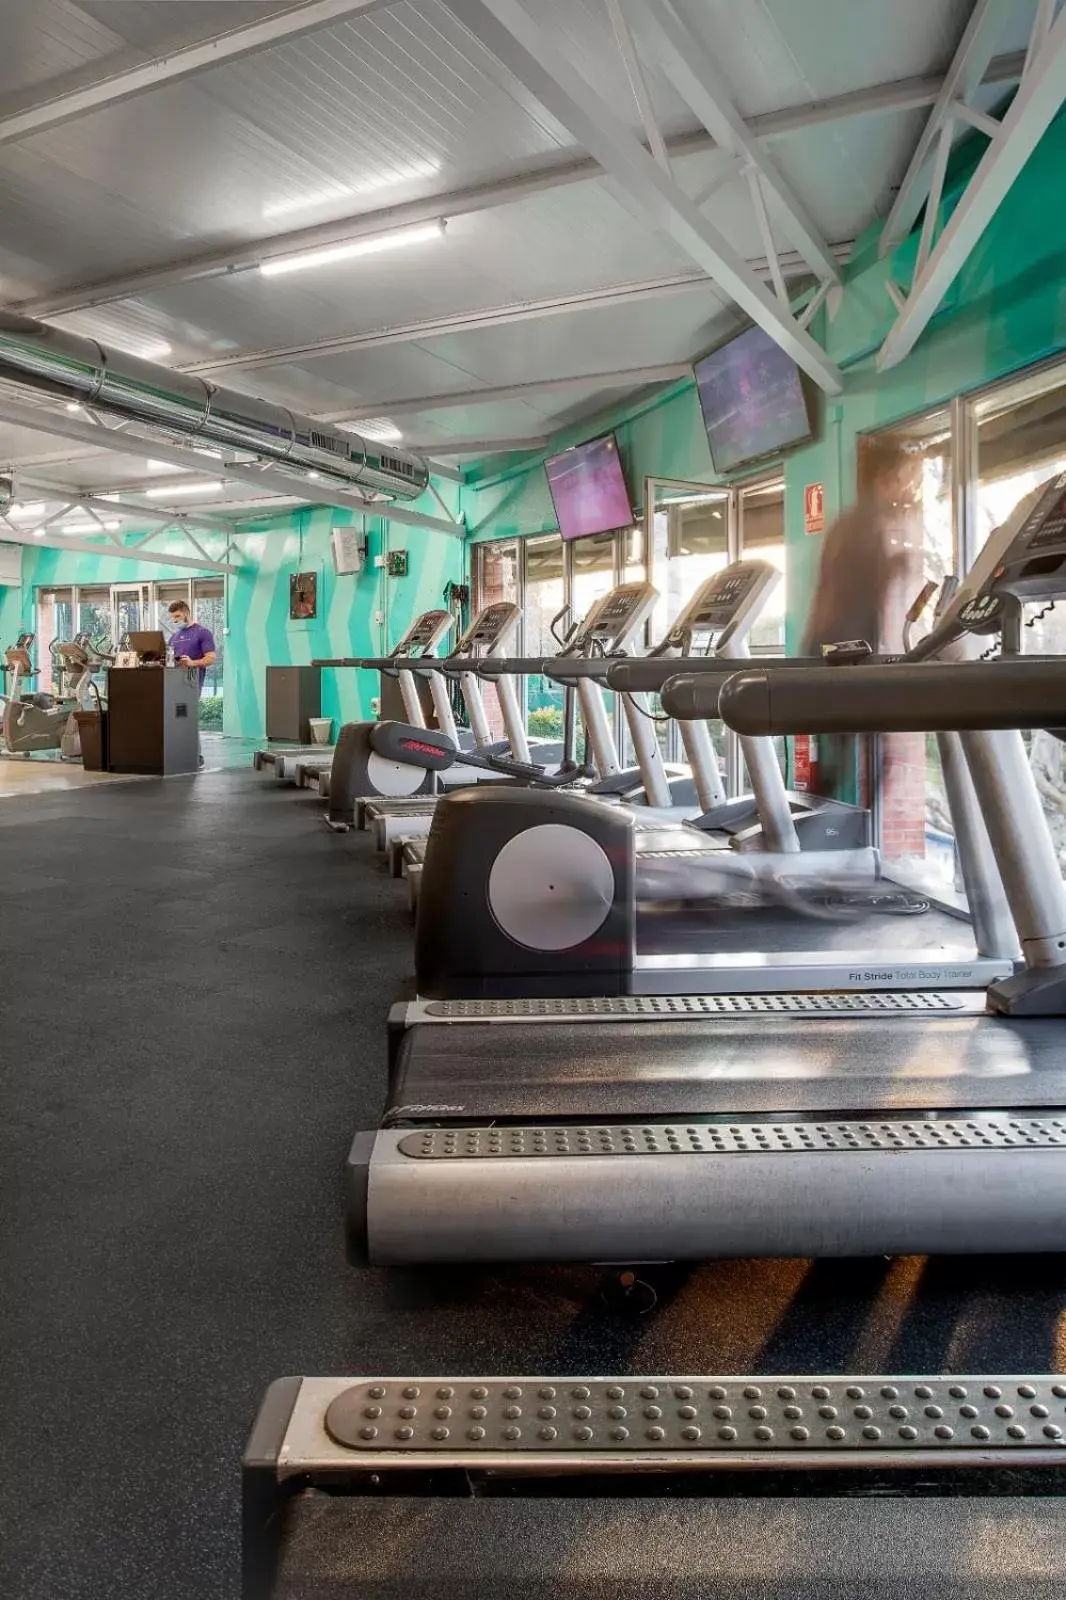 Fitness centre/facilities, Fitness Center/Facilities in Ciutat de Granollers